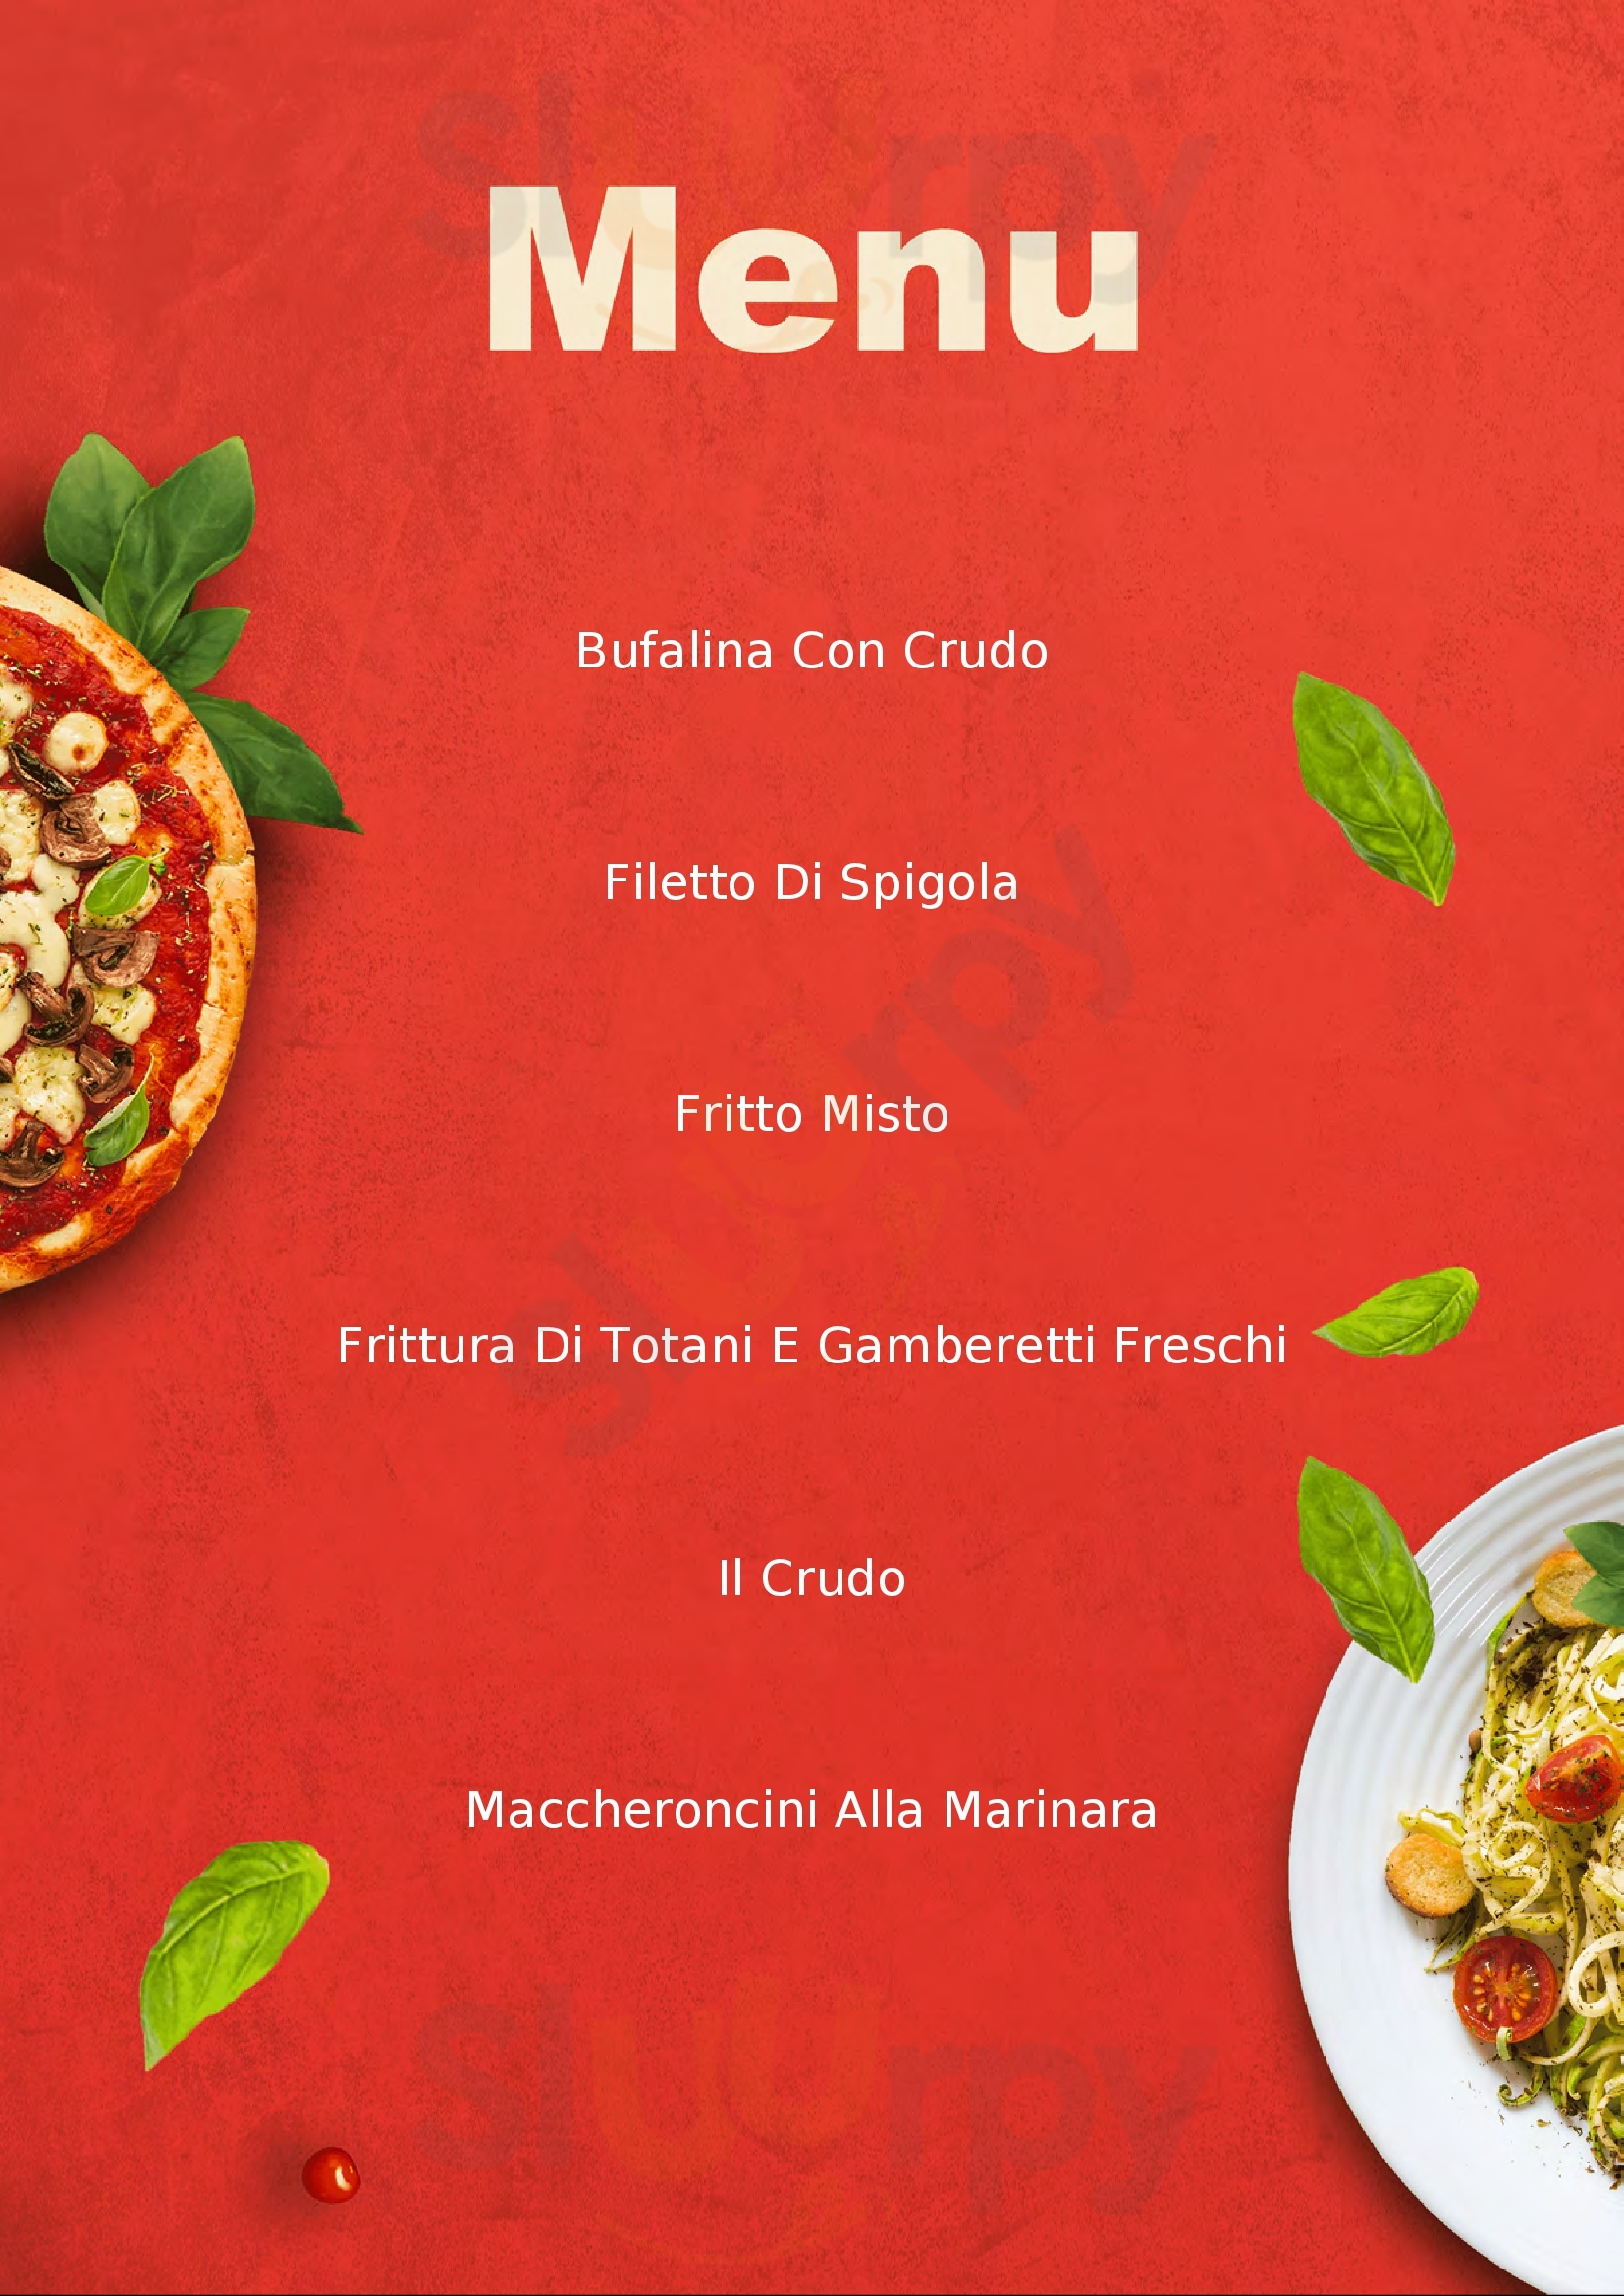 Onda Blu - Ristorante & Pizzeria Castel di Tusa menù 1 pagina